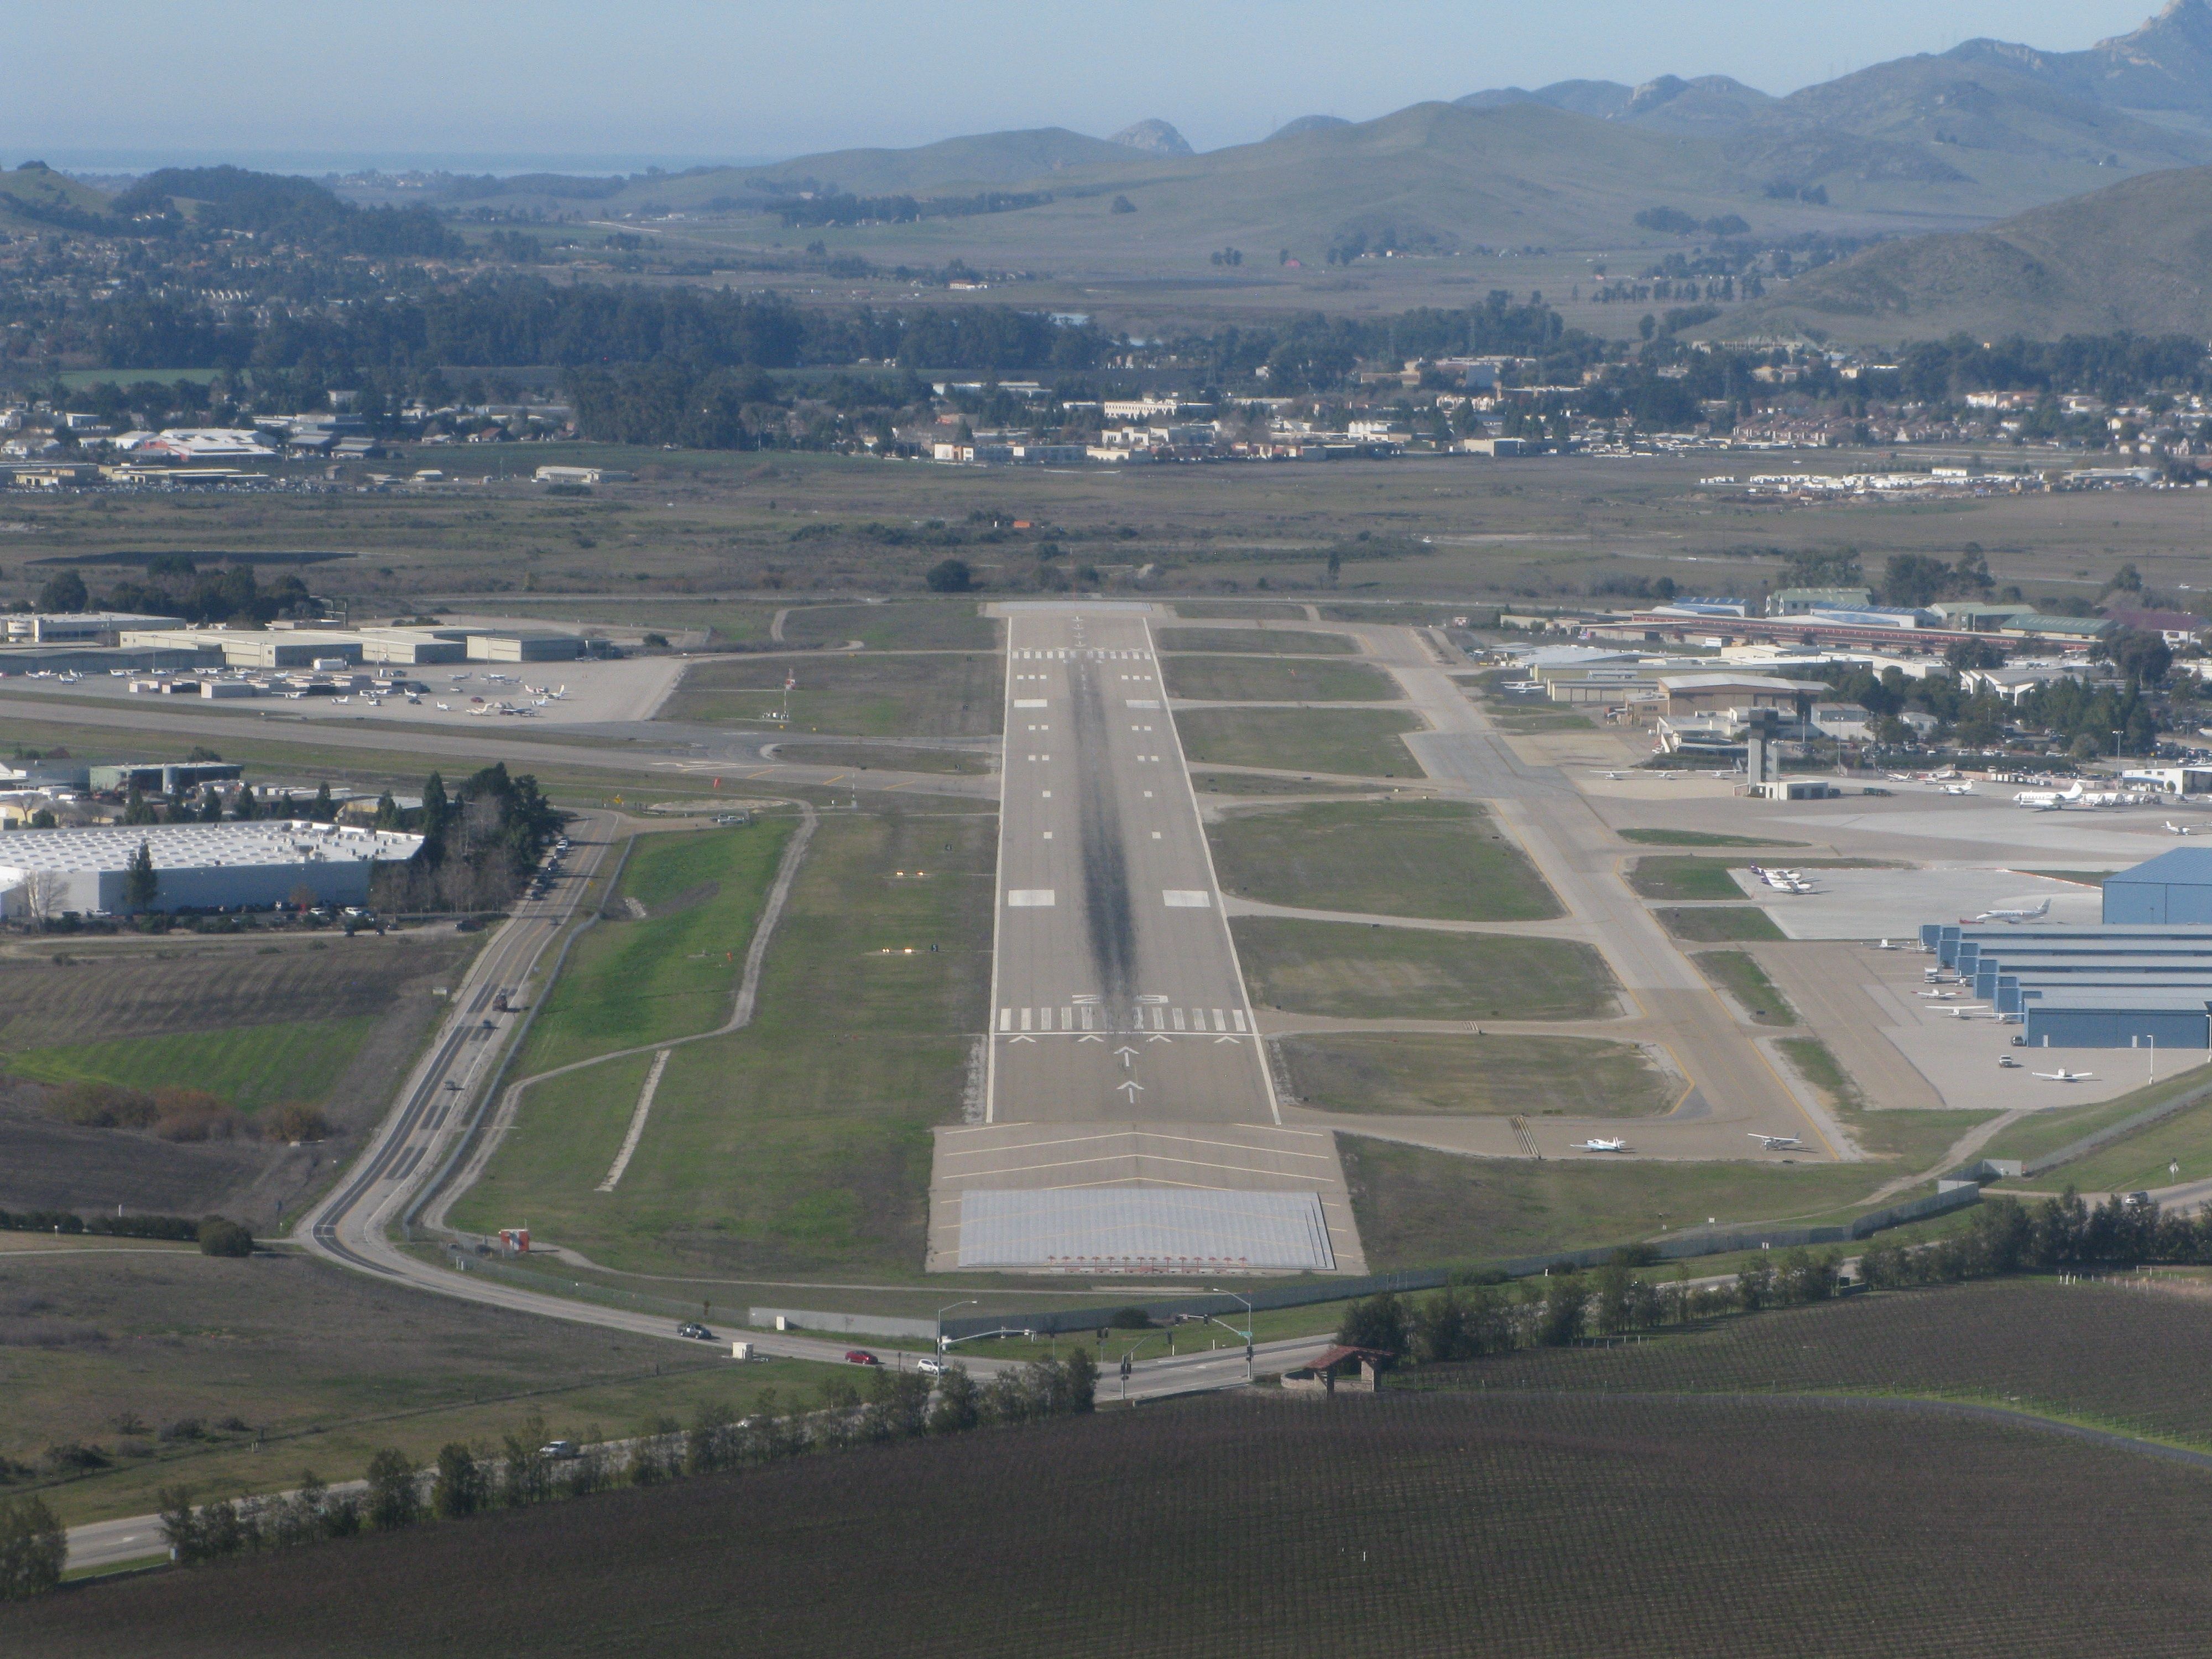 — — - Cirrus SR22 final approach to 29 at San Luis Obispo, CA